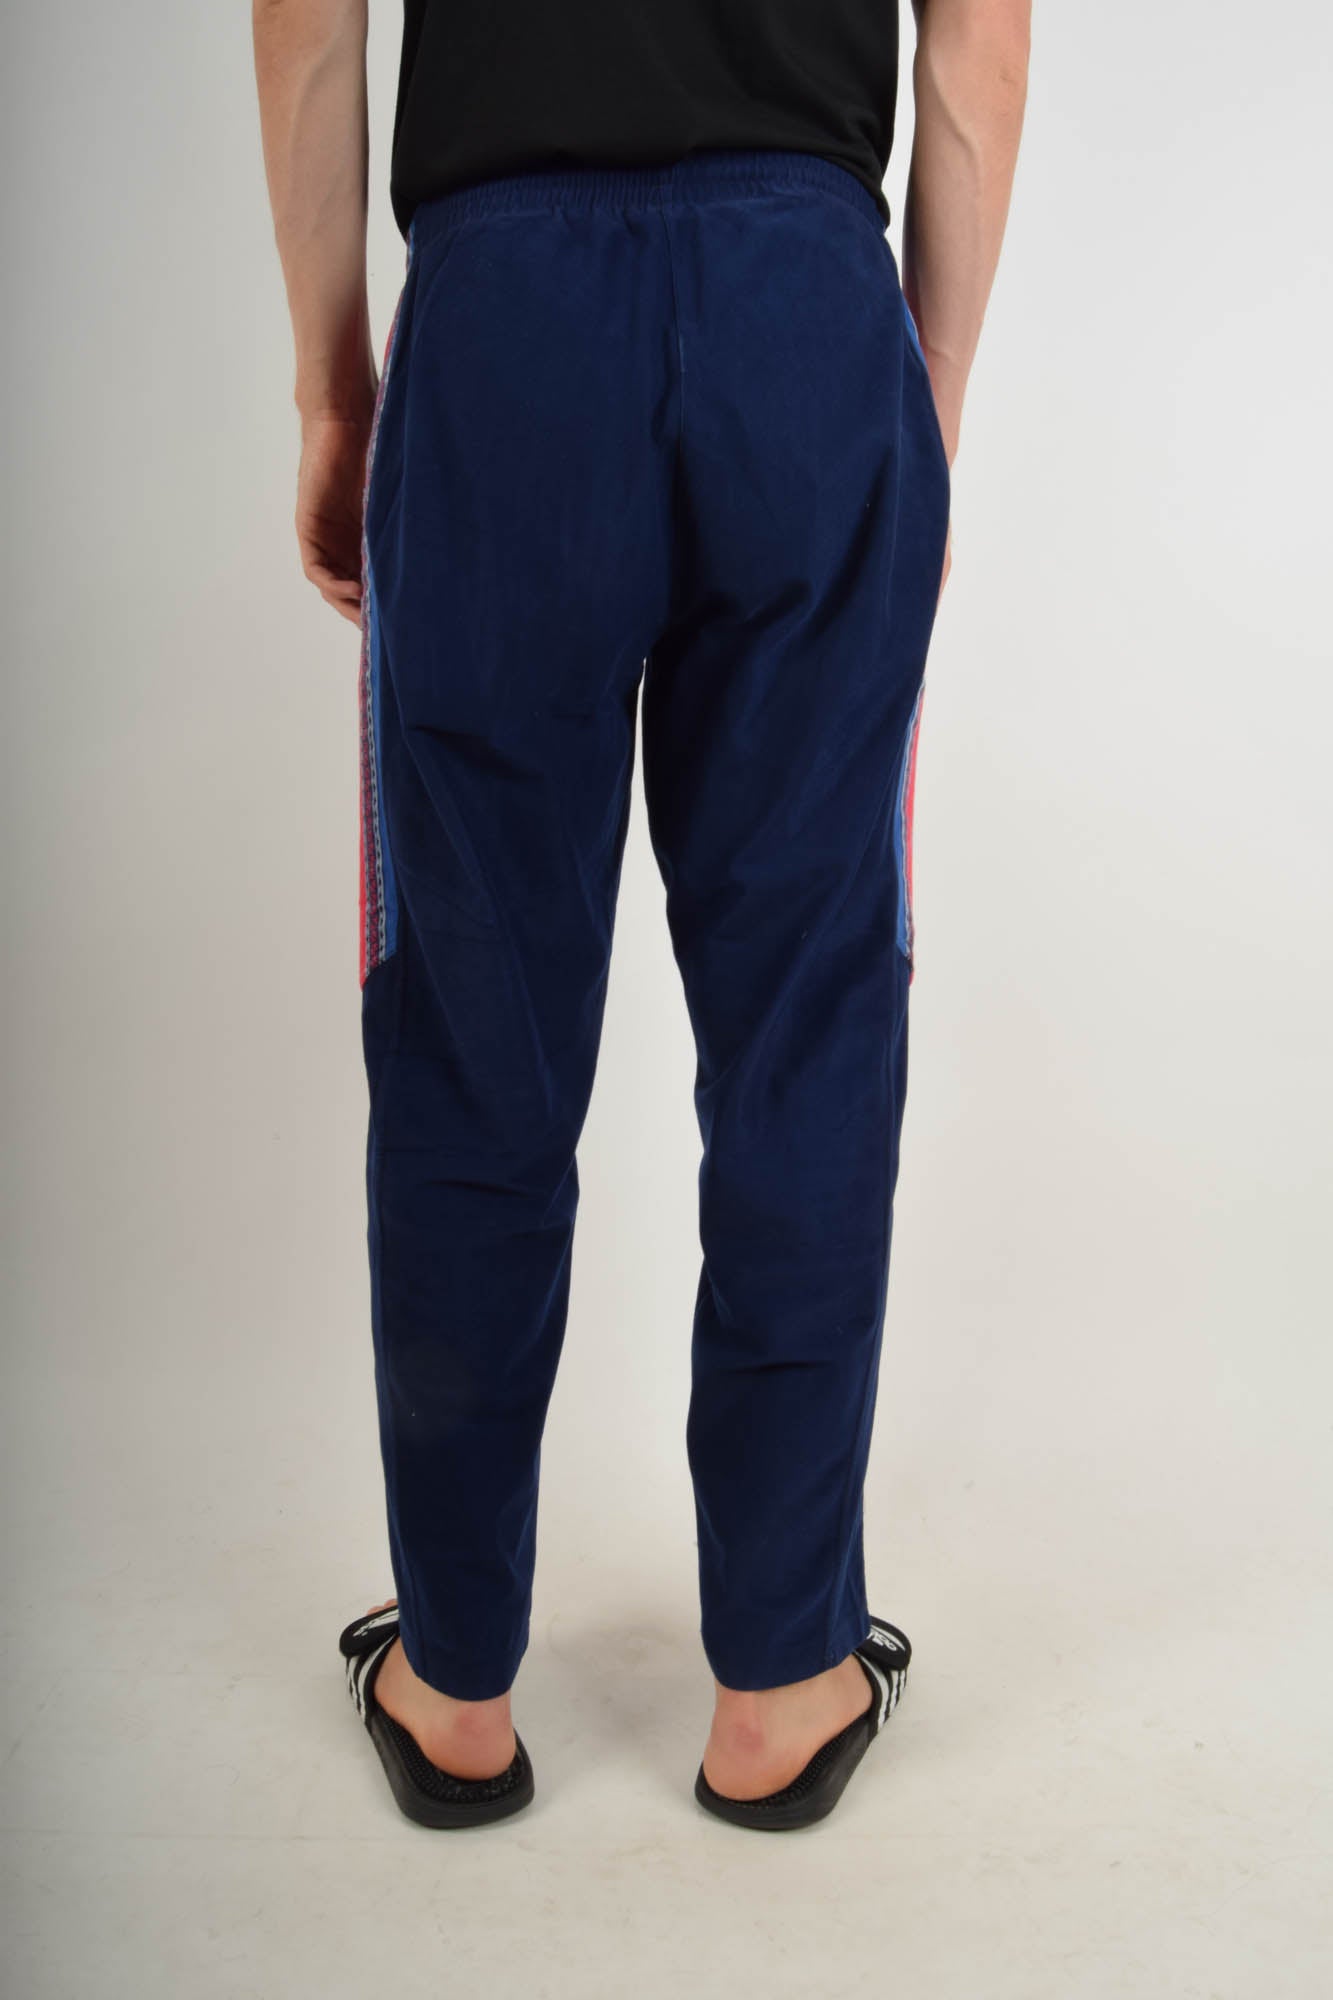 Vintage Diadora Track pants / Poppers 90's Size M Blue Pink